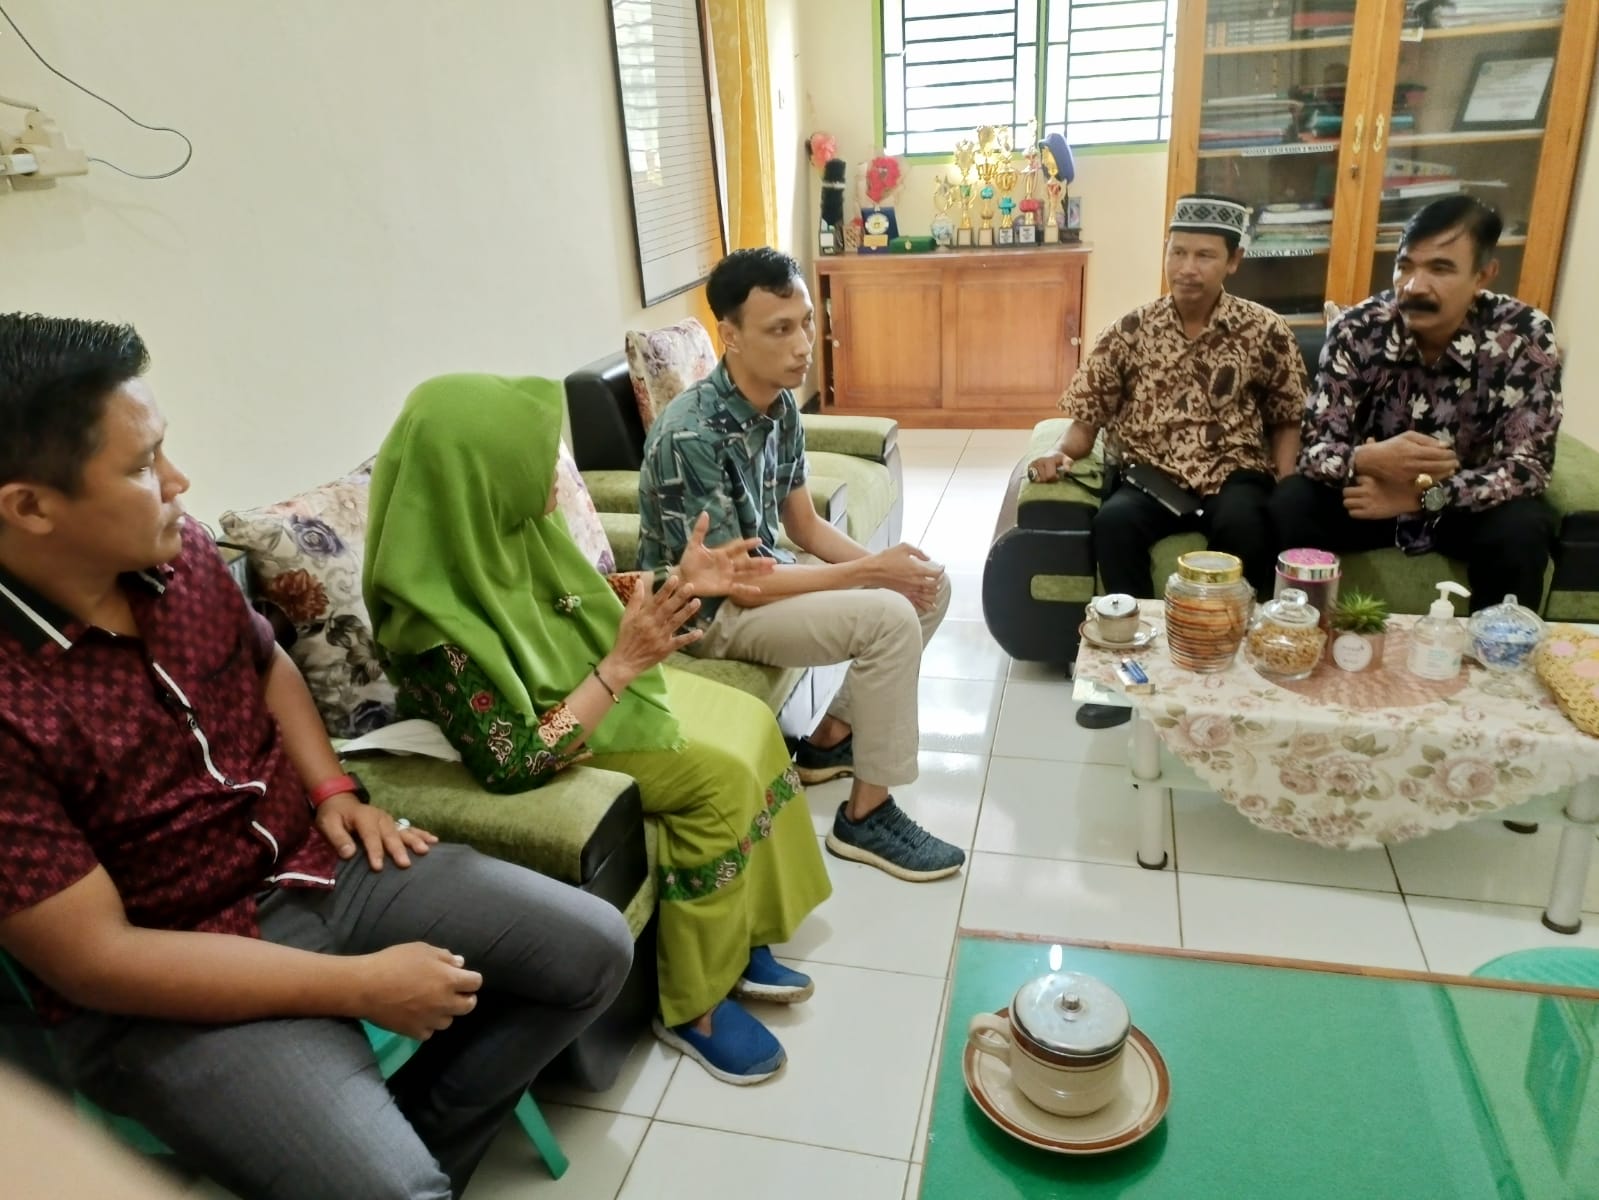 52 Siswi SMP di Bengkulu Utara Sayat Tangan Pakai Kaca dan Pentul, Ada 2 Penyebab Aksi Nekat Itu    